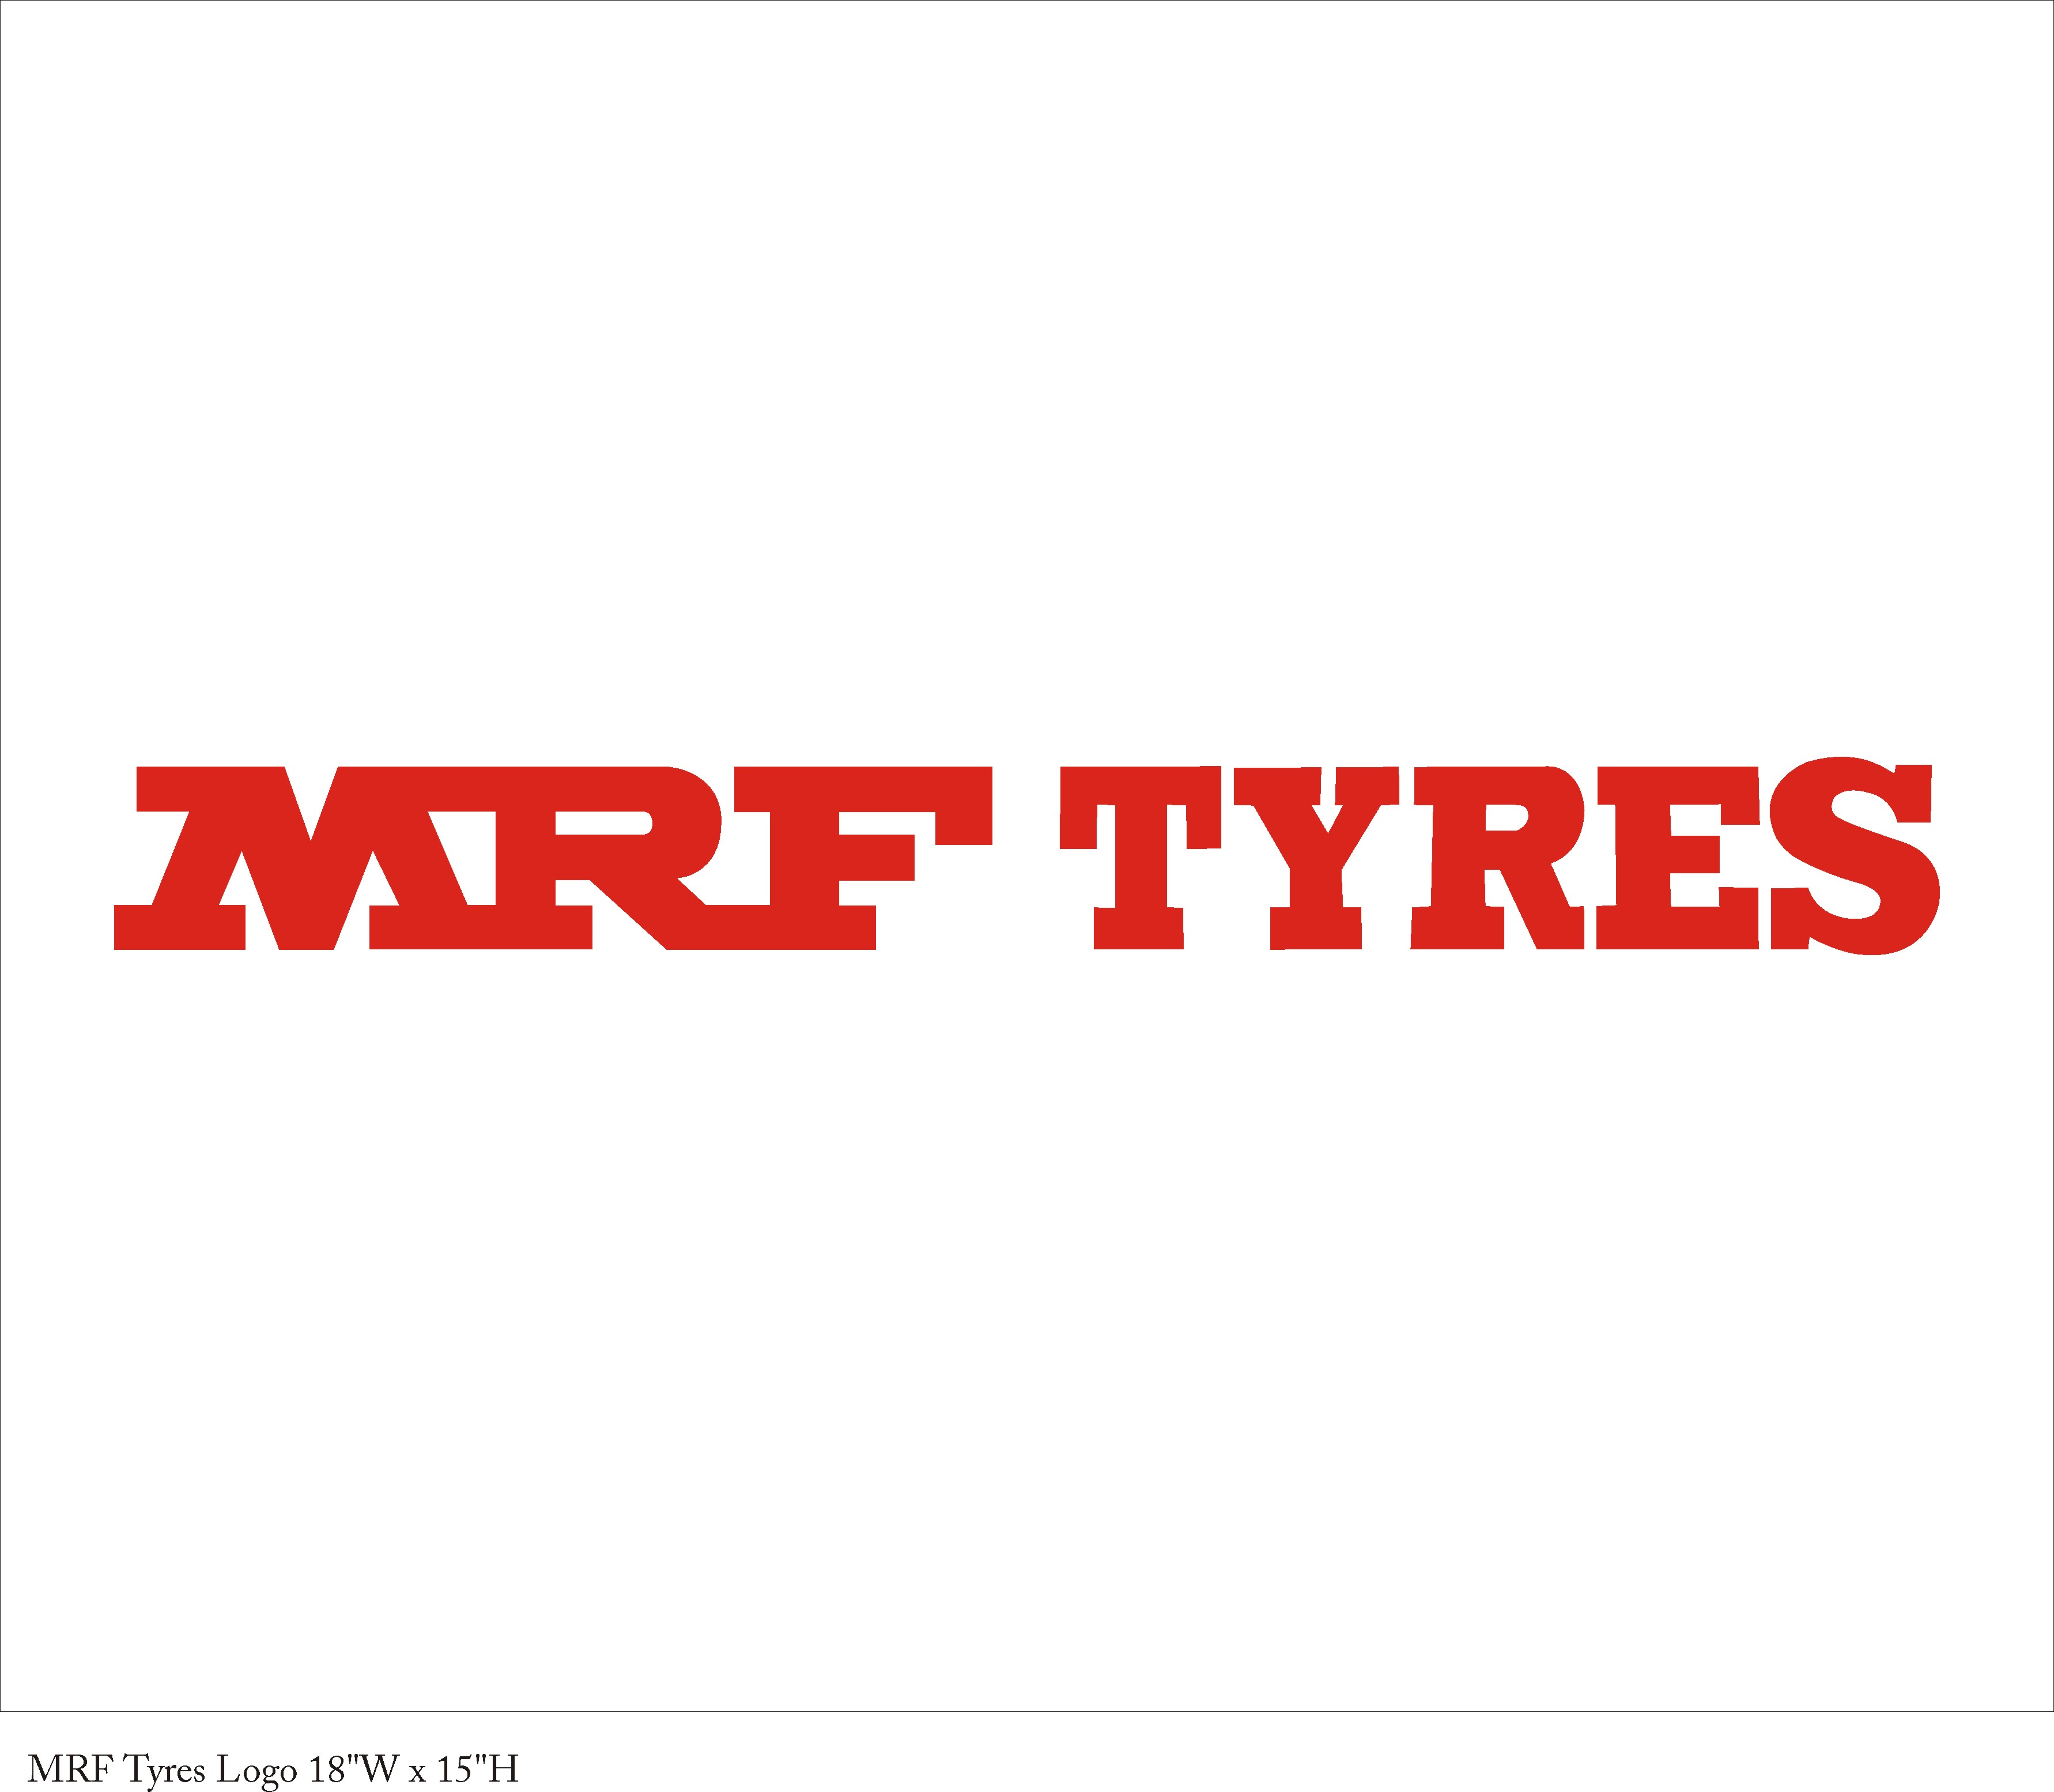 MRF tyres logo 2 -18 x 15 in